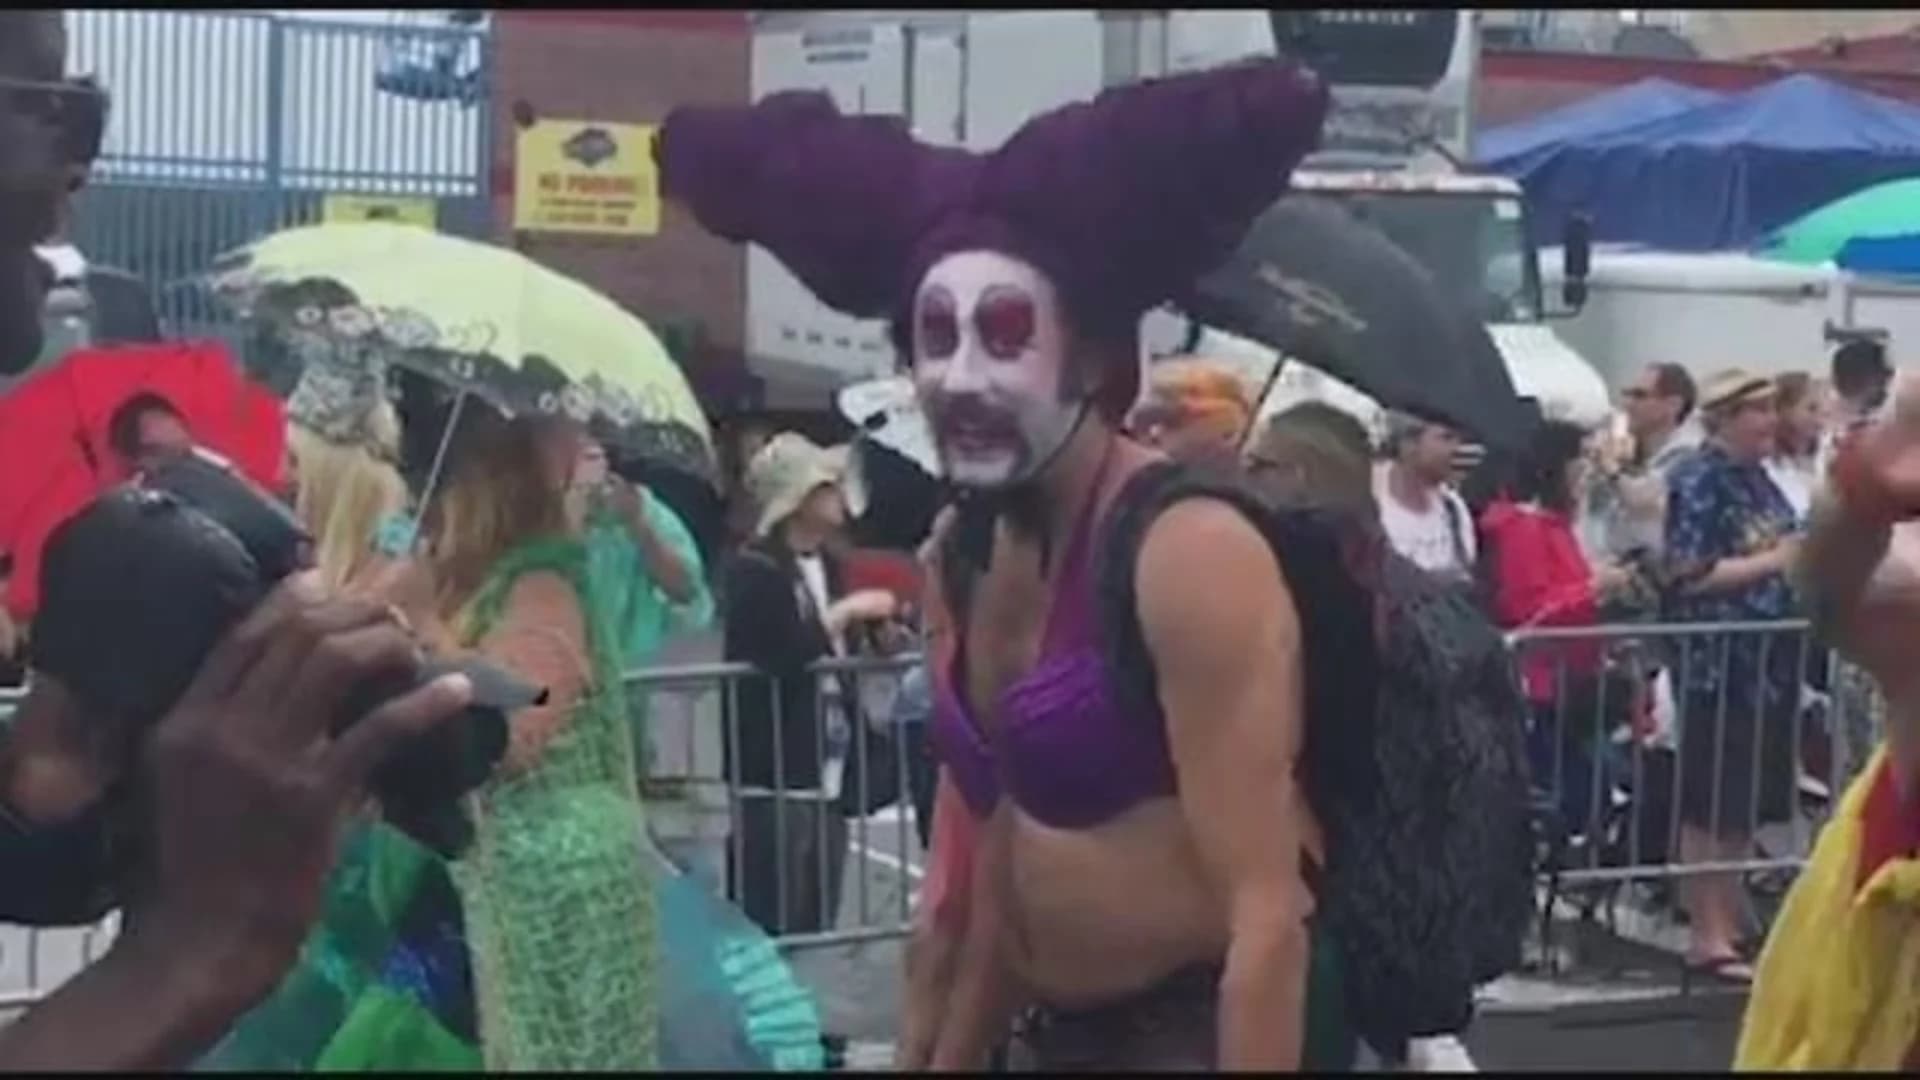 35th annual Mermaid Parade held in Coney Island